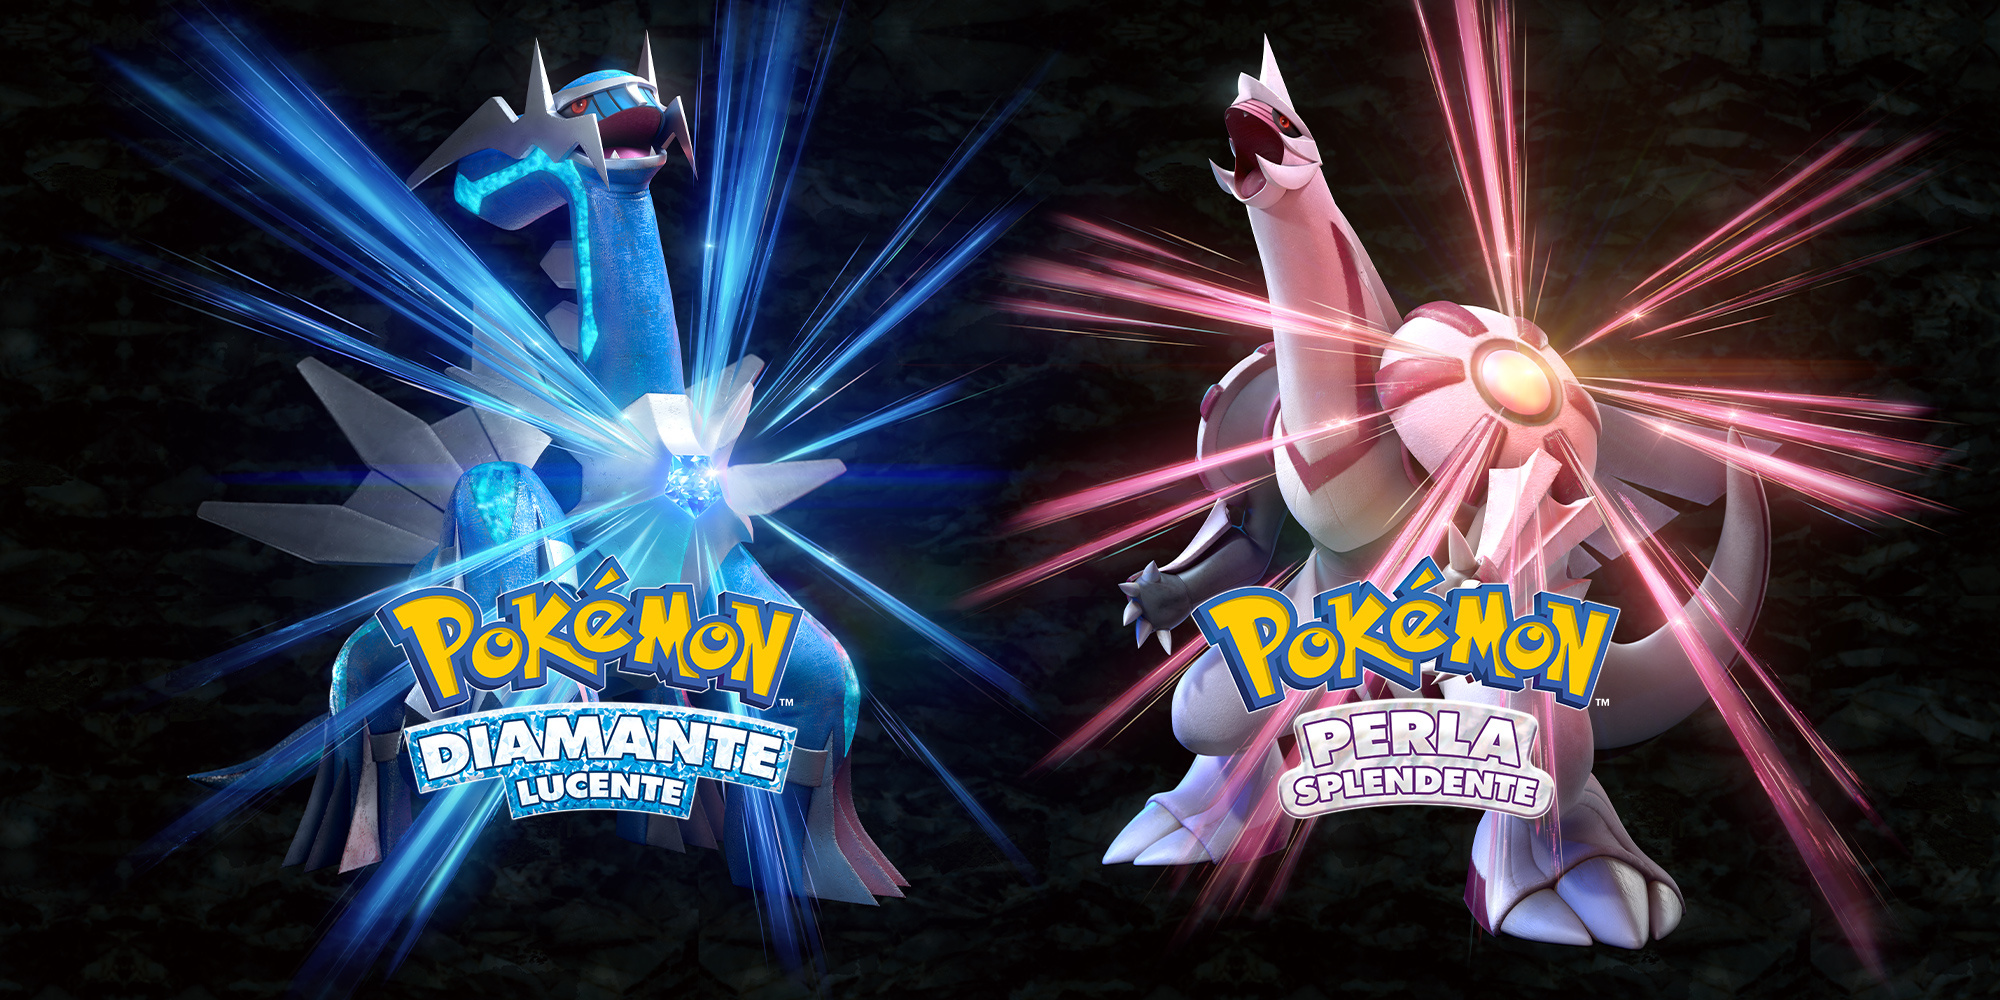 Pokémon Diamante Lucente & Pokémon Perla Splendente